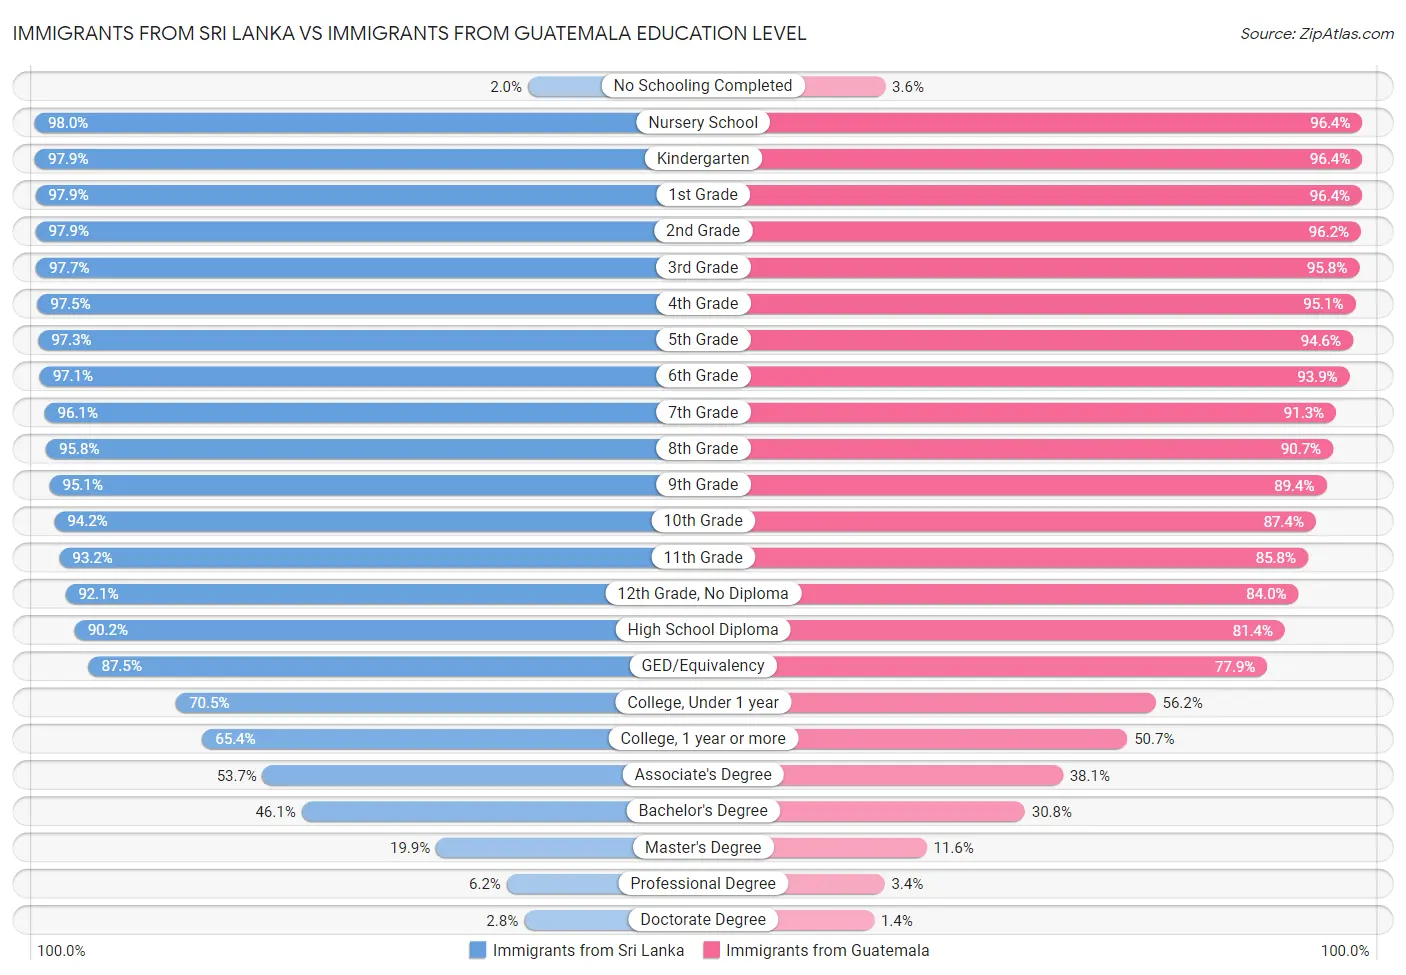 Immigrants from Sri Lanka vs Immigrants from Guatemala Education Level